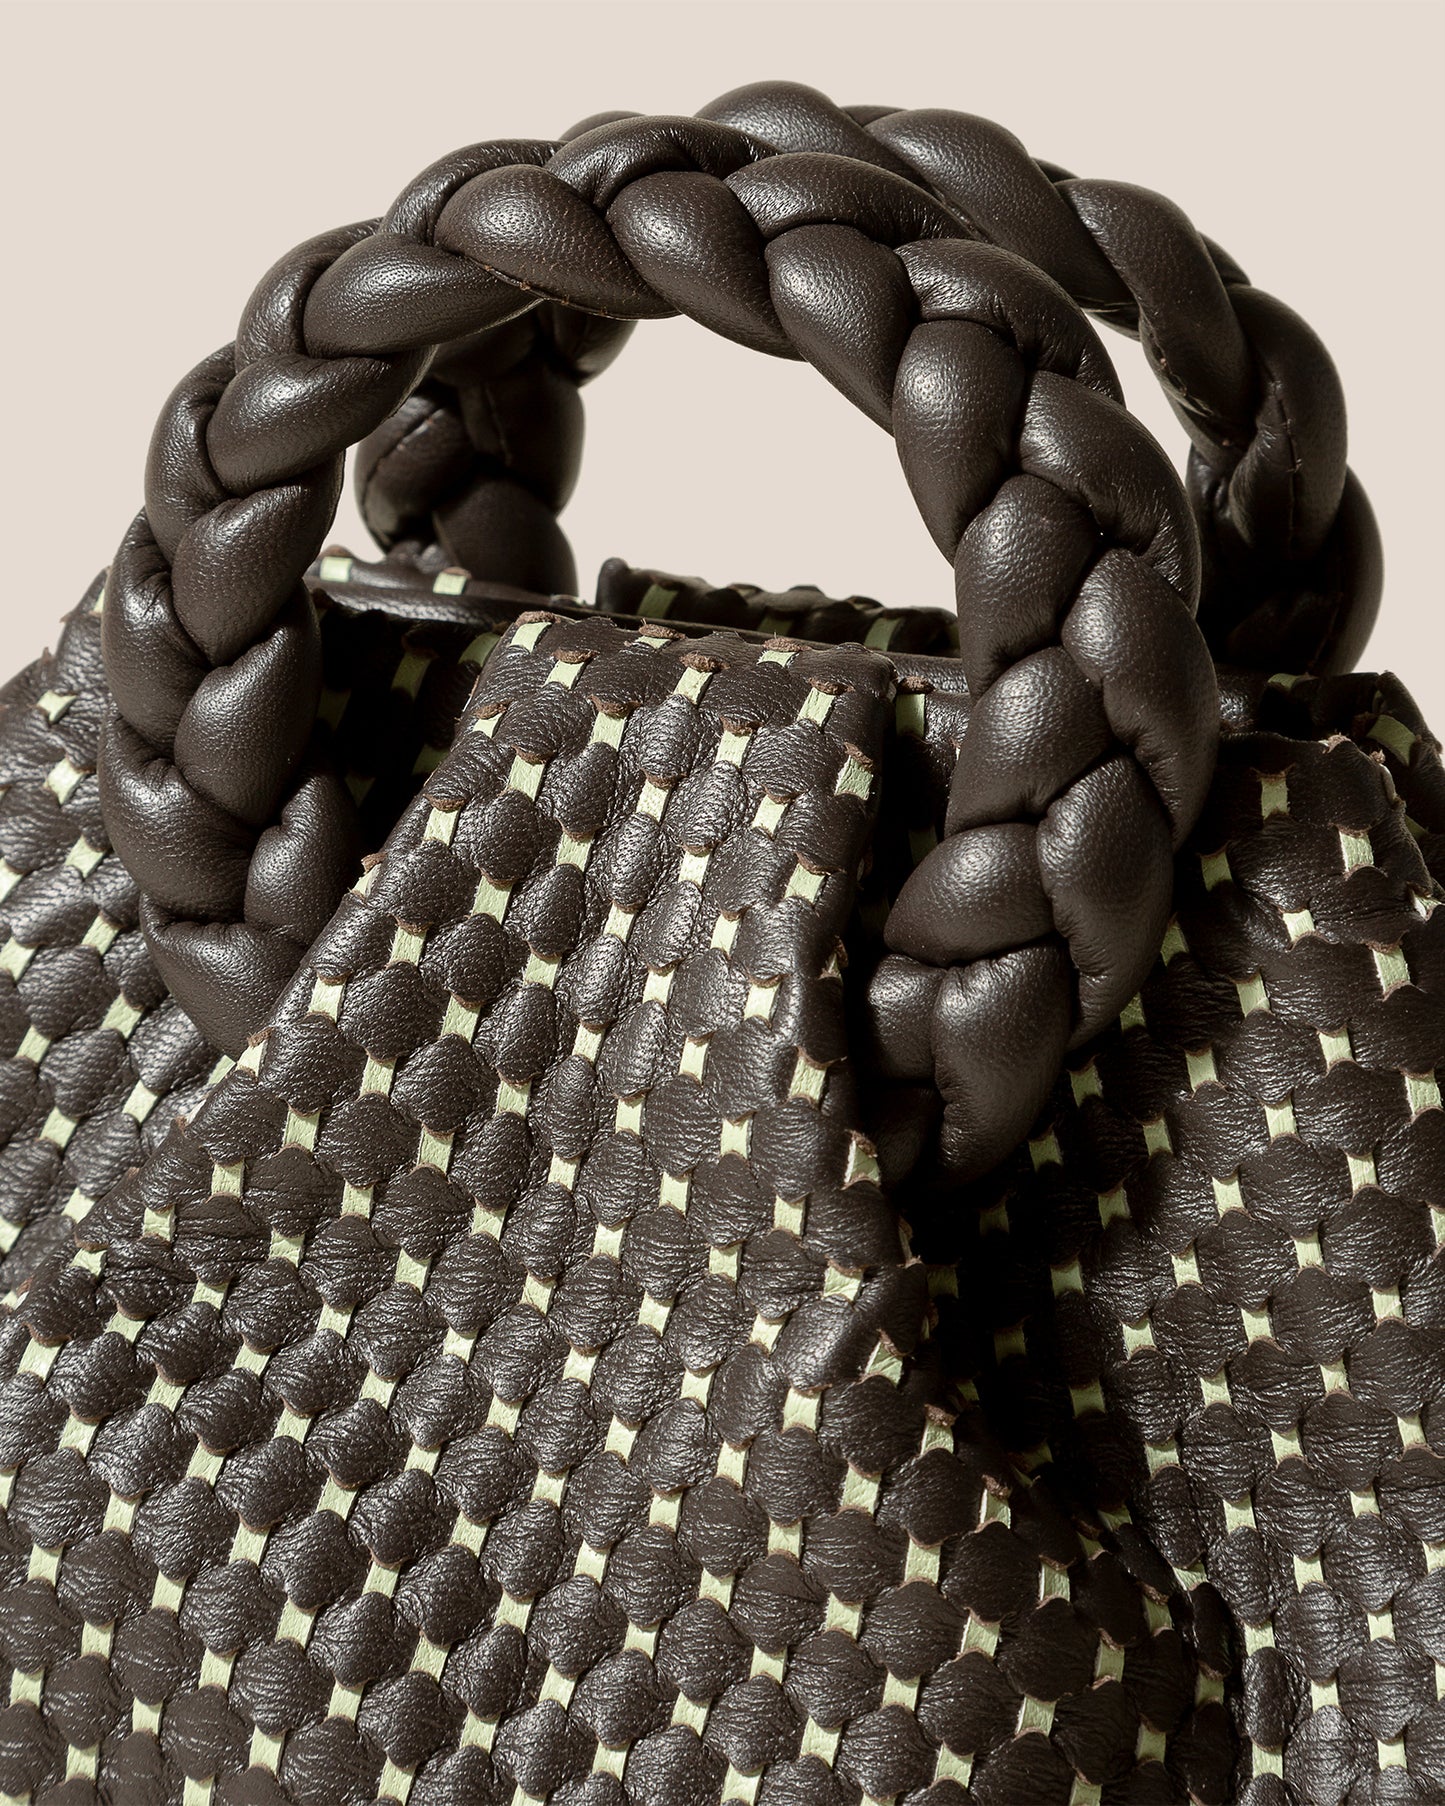 BOMBON WOVEN - Small Plaited-handle Leather Crossbody Bag